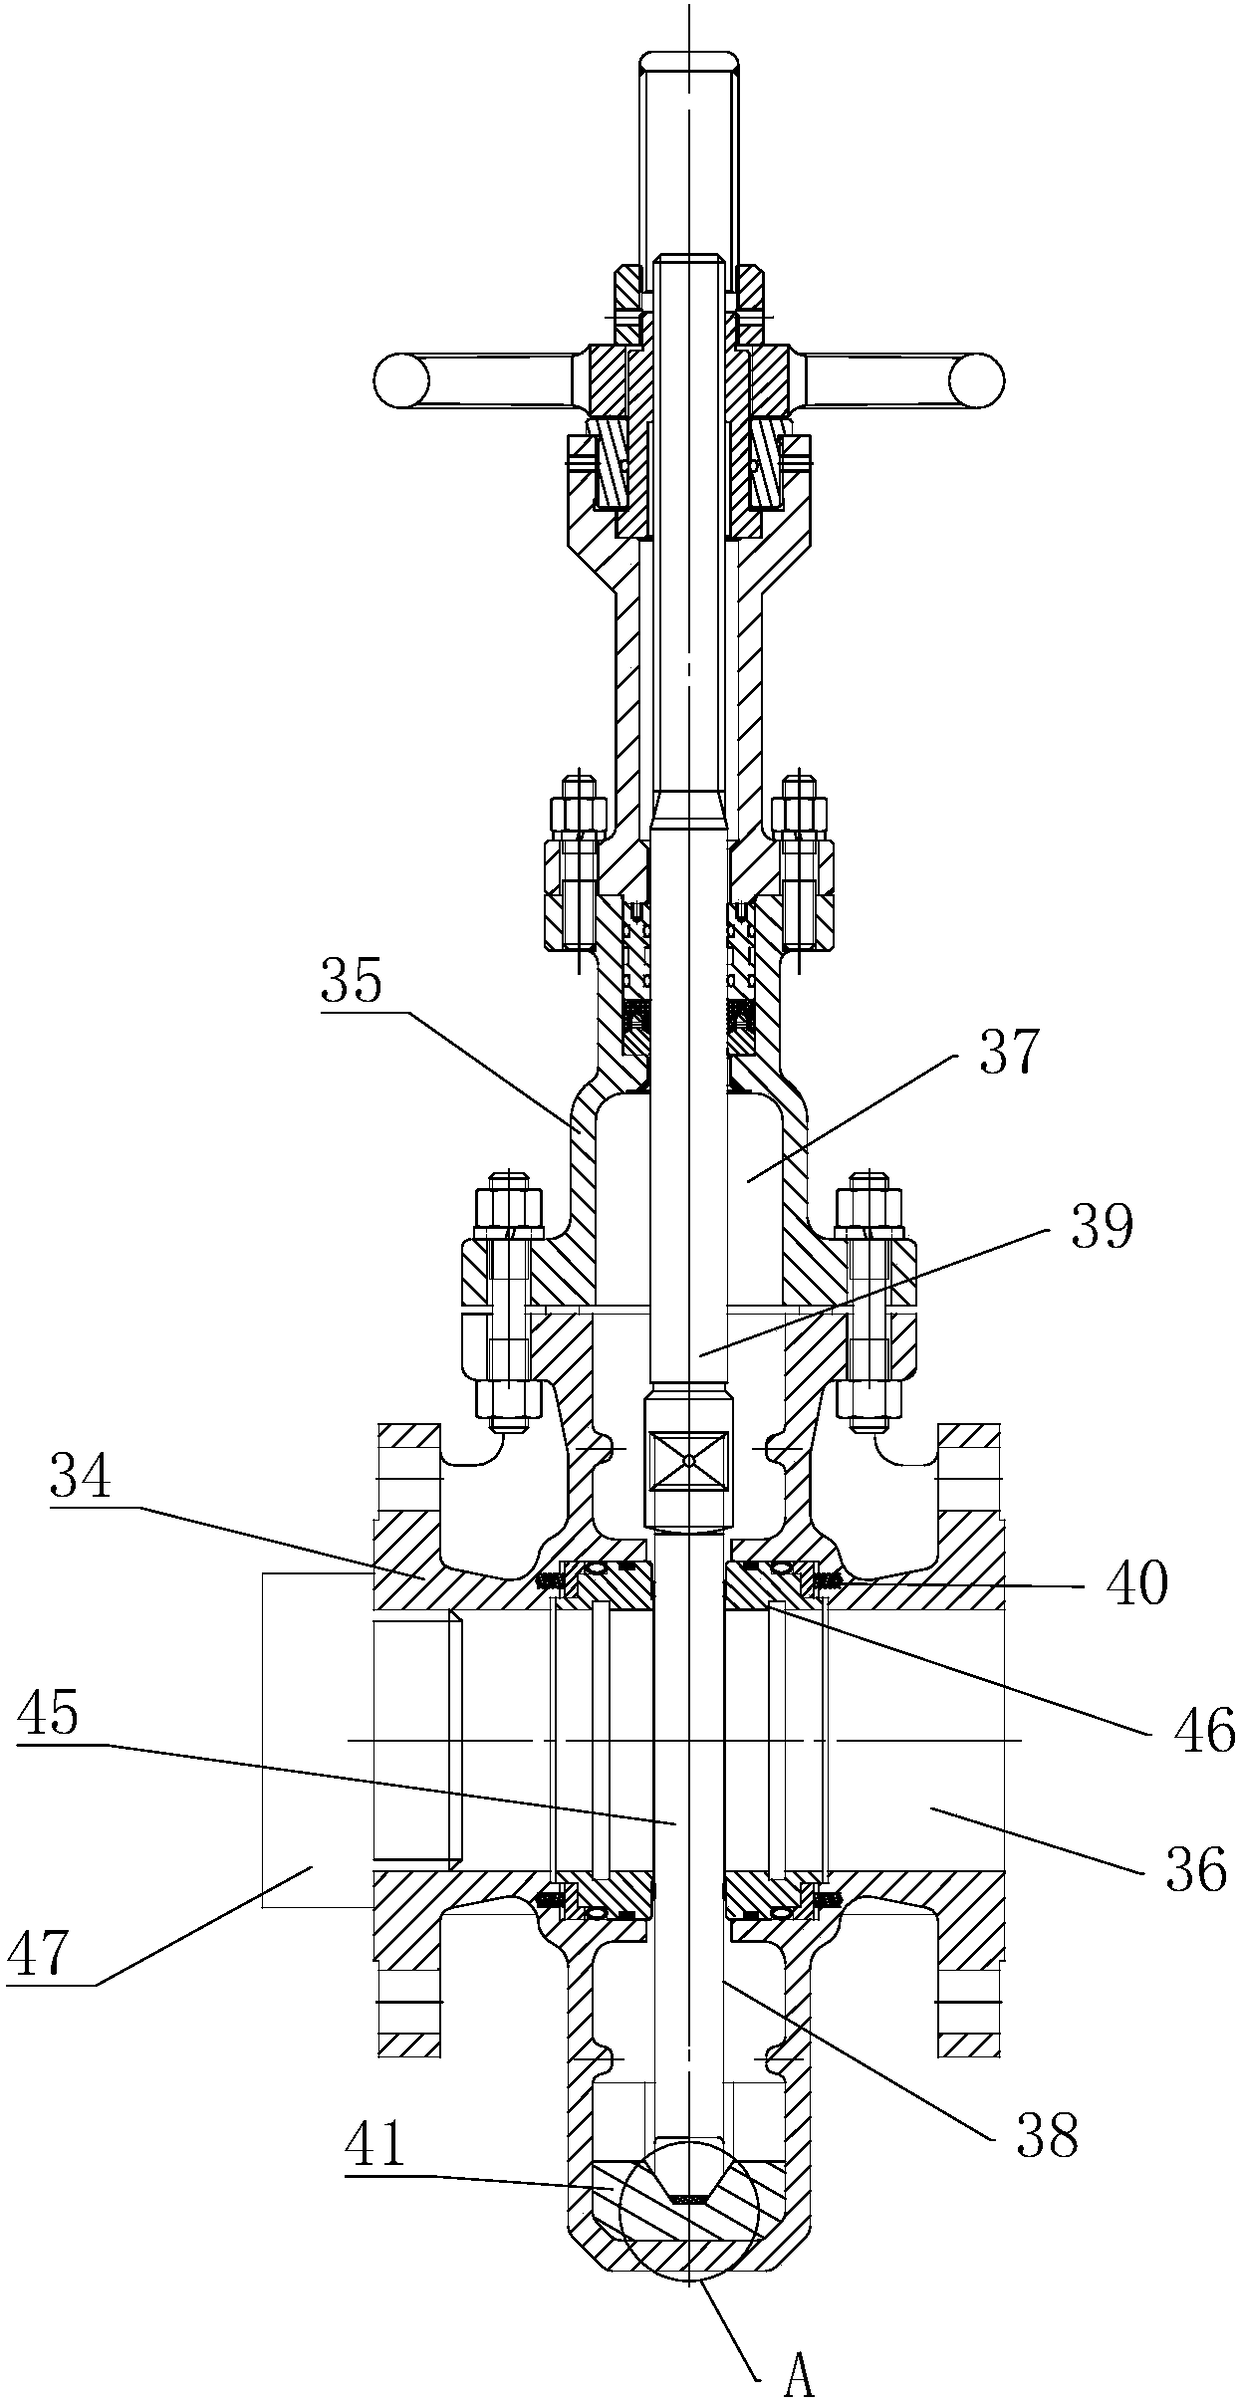 Flat gate valve with multiplexed output adjustment